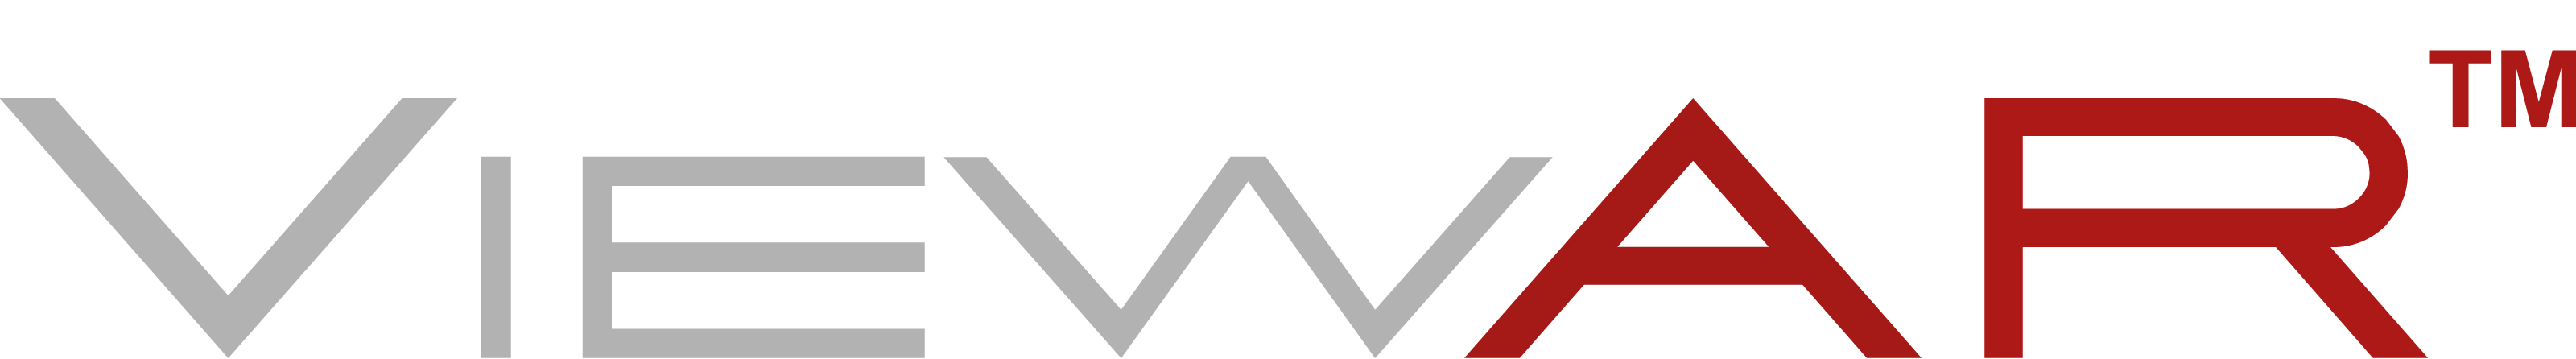 ViewAR logo